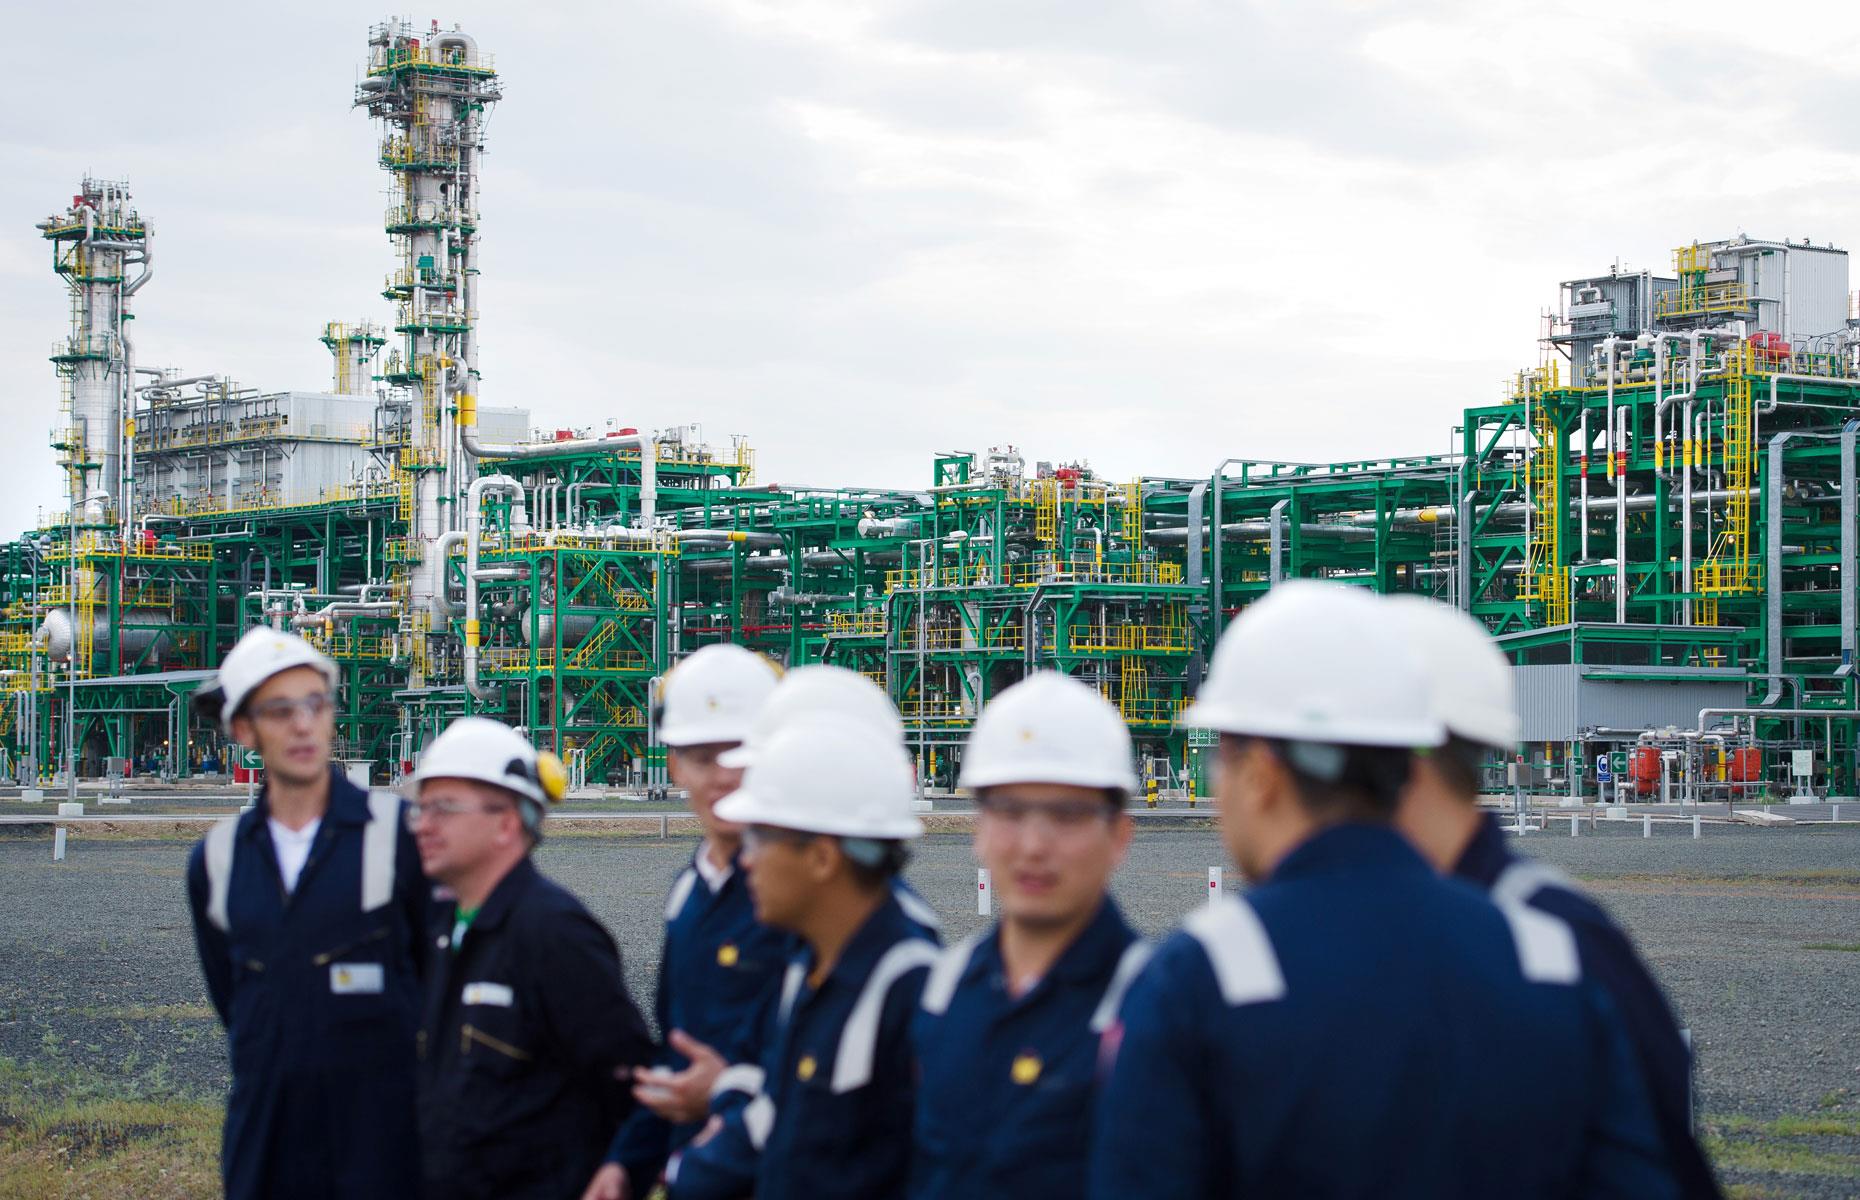 13. Kazakhstan: 1.769 million barrels per day